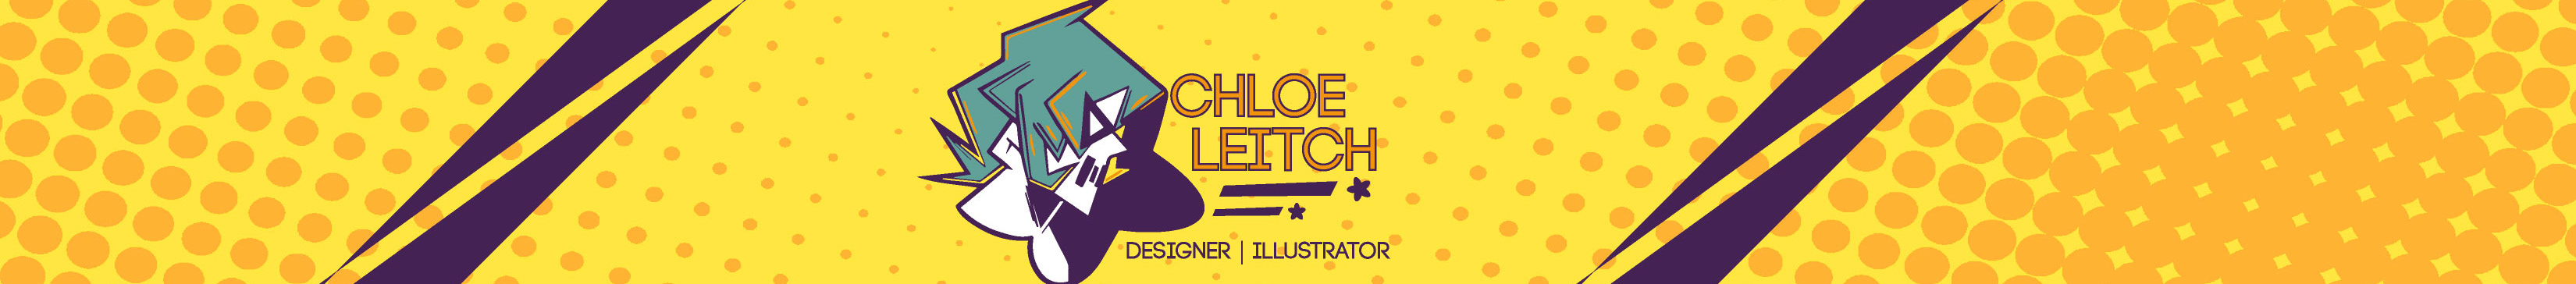 Chloe Leitchs profilbanner